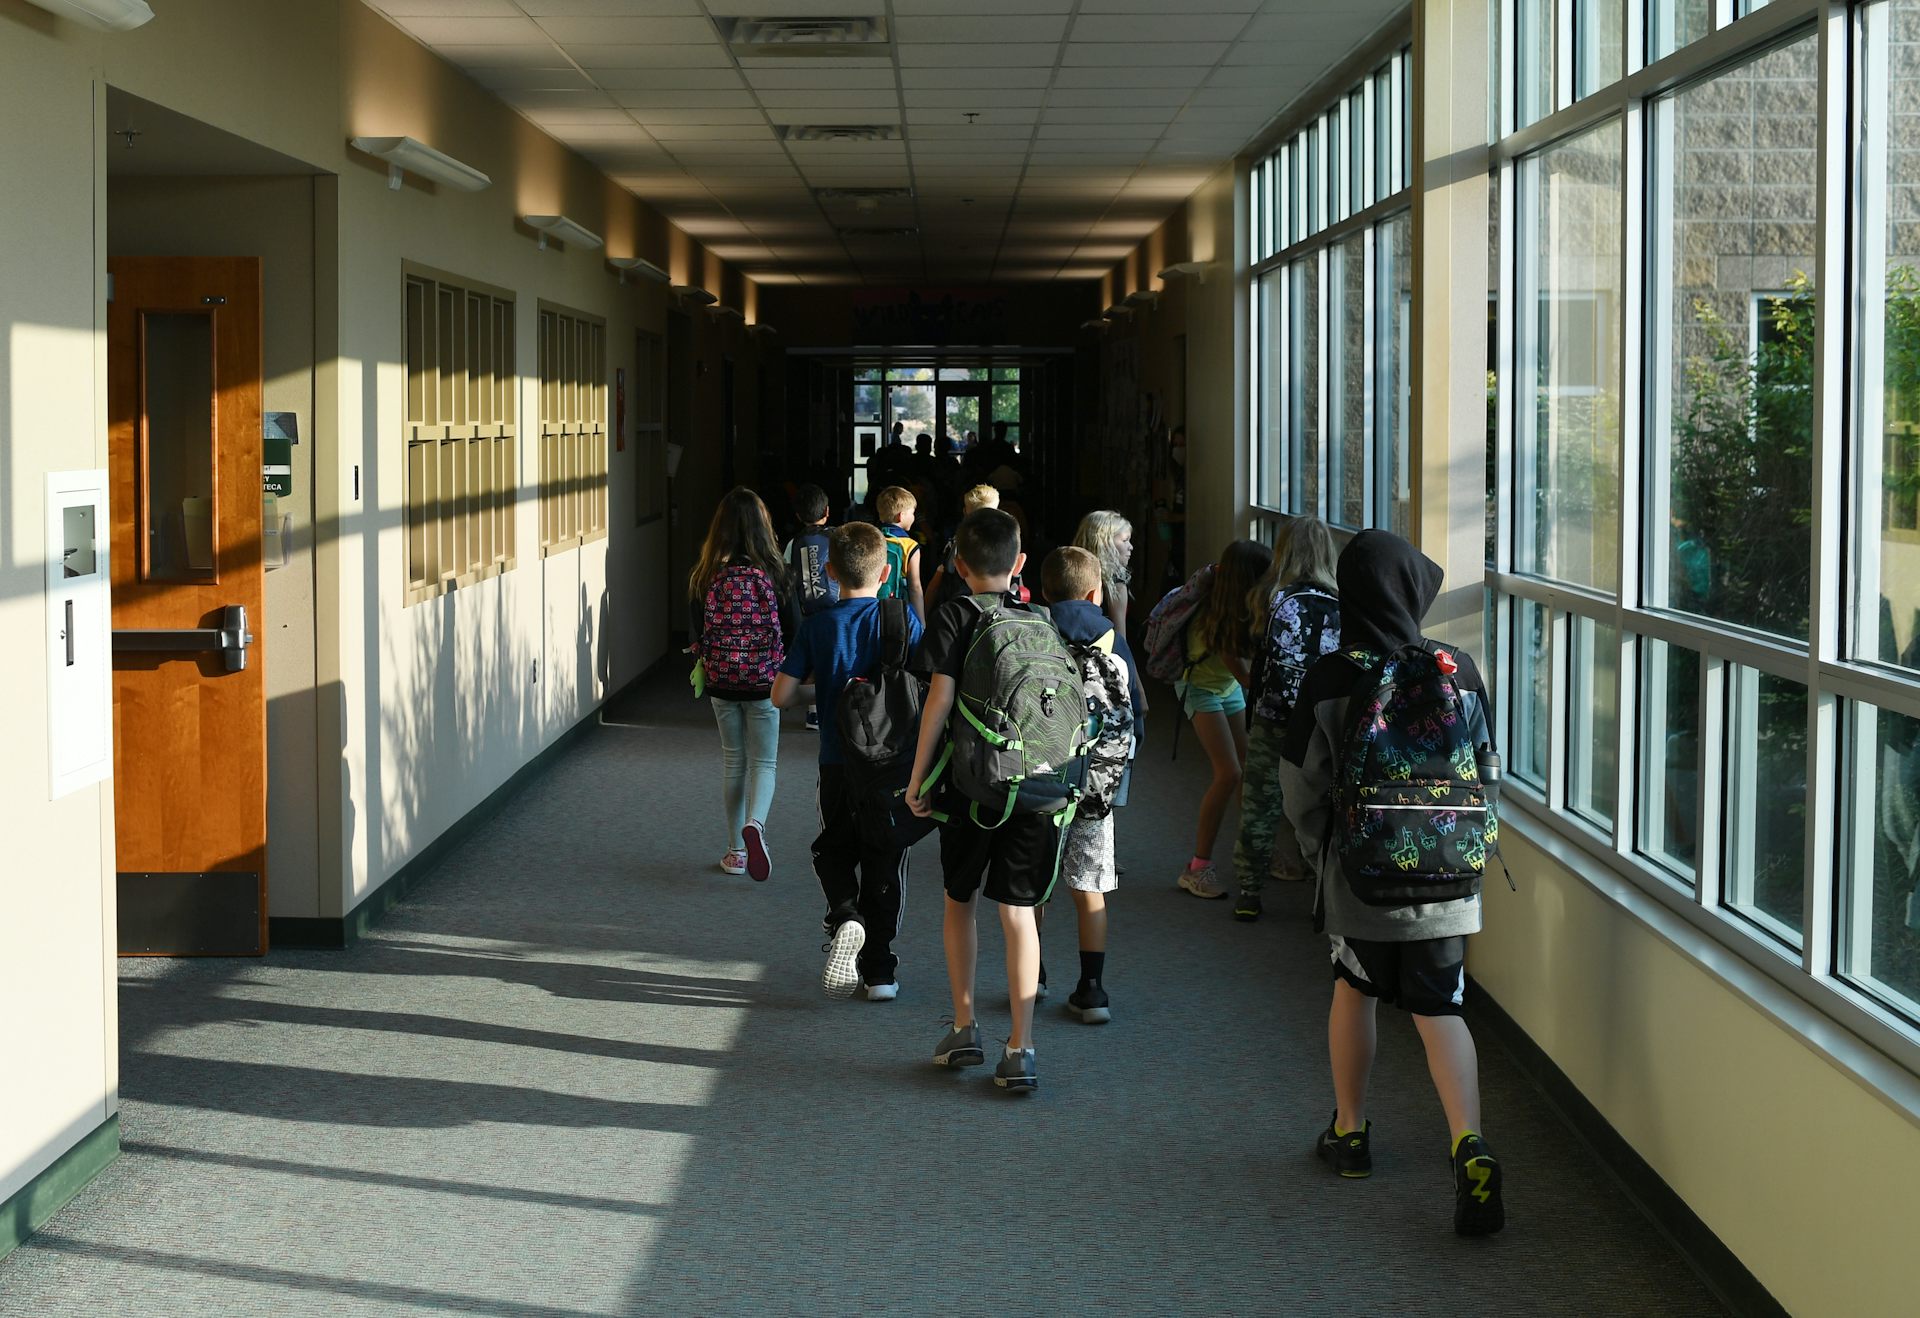 Students wearing backpacks walk down school corridor